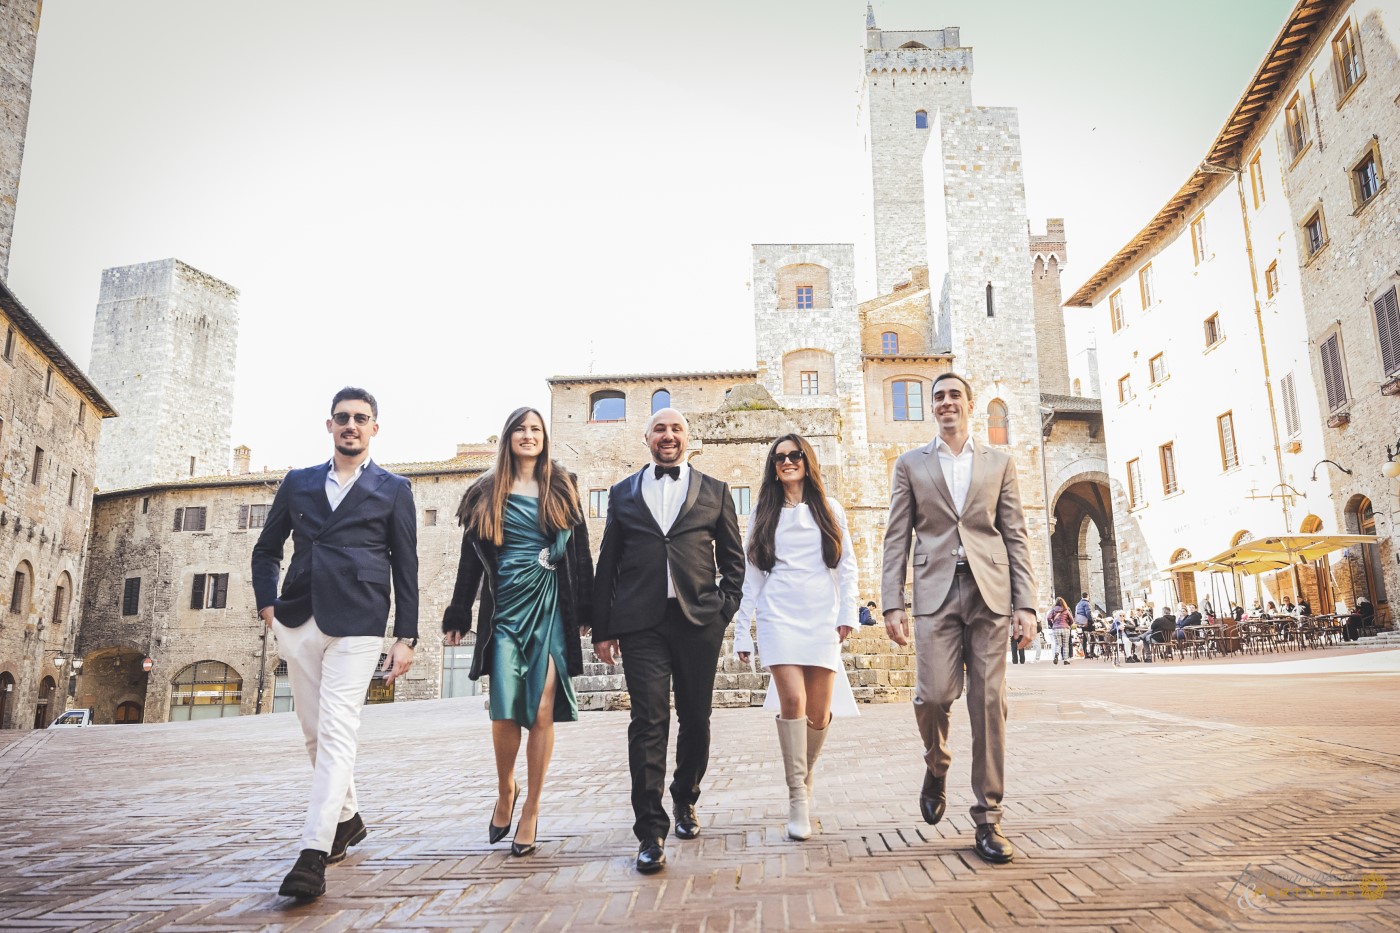 Walking together through San Gimignano